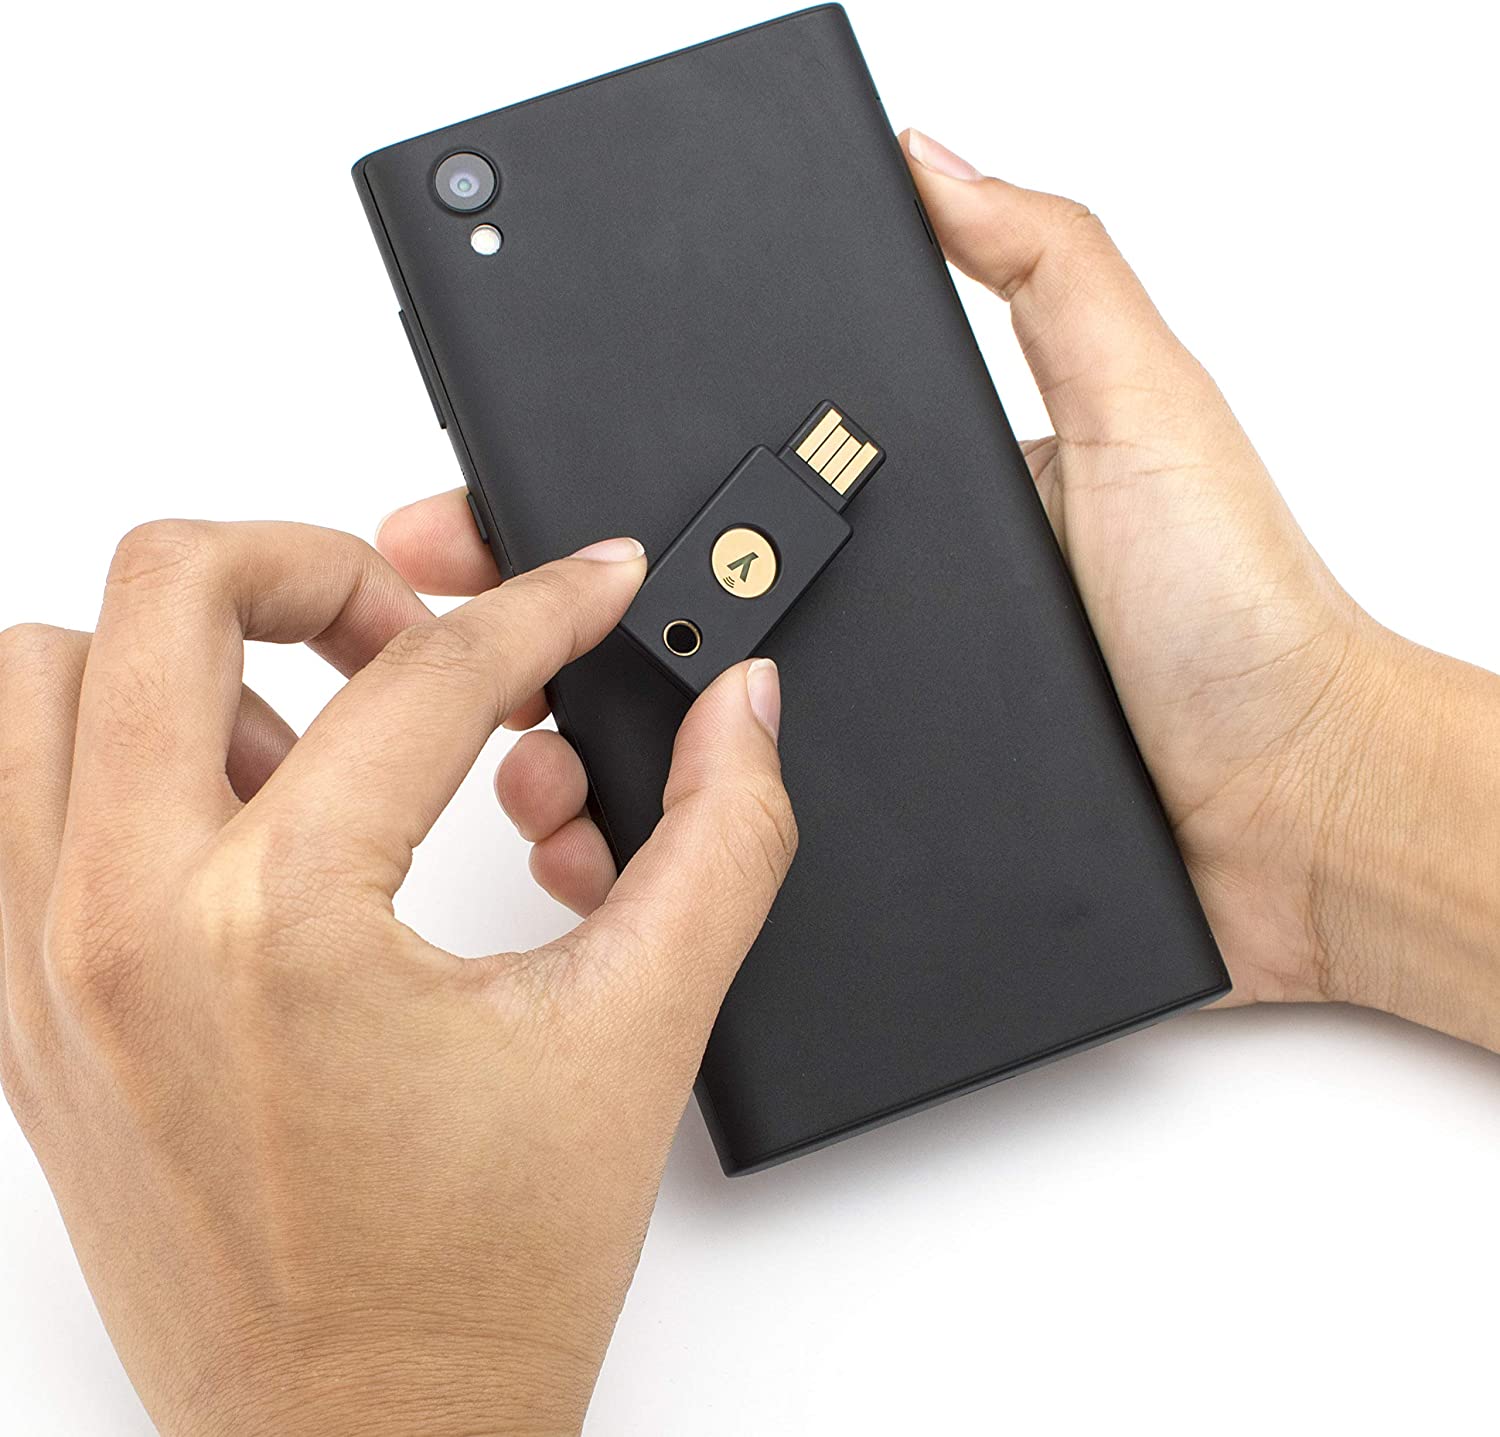 YubiKey 5 NFC touching back of phone